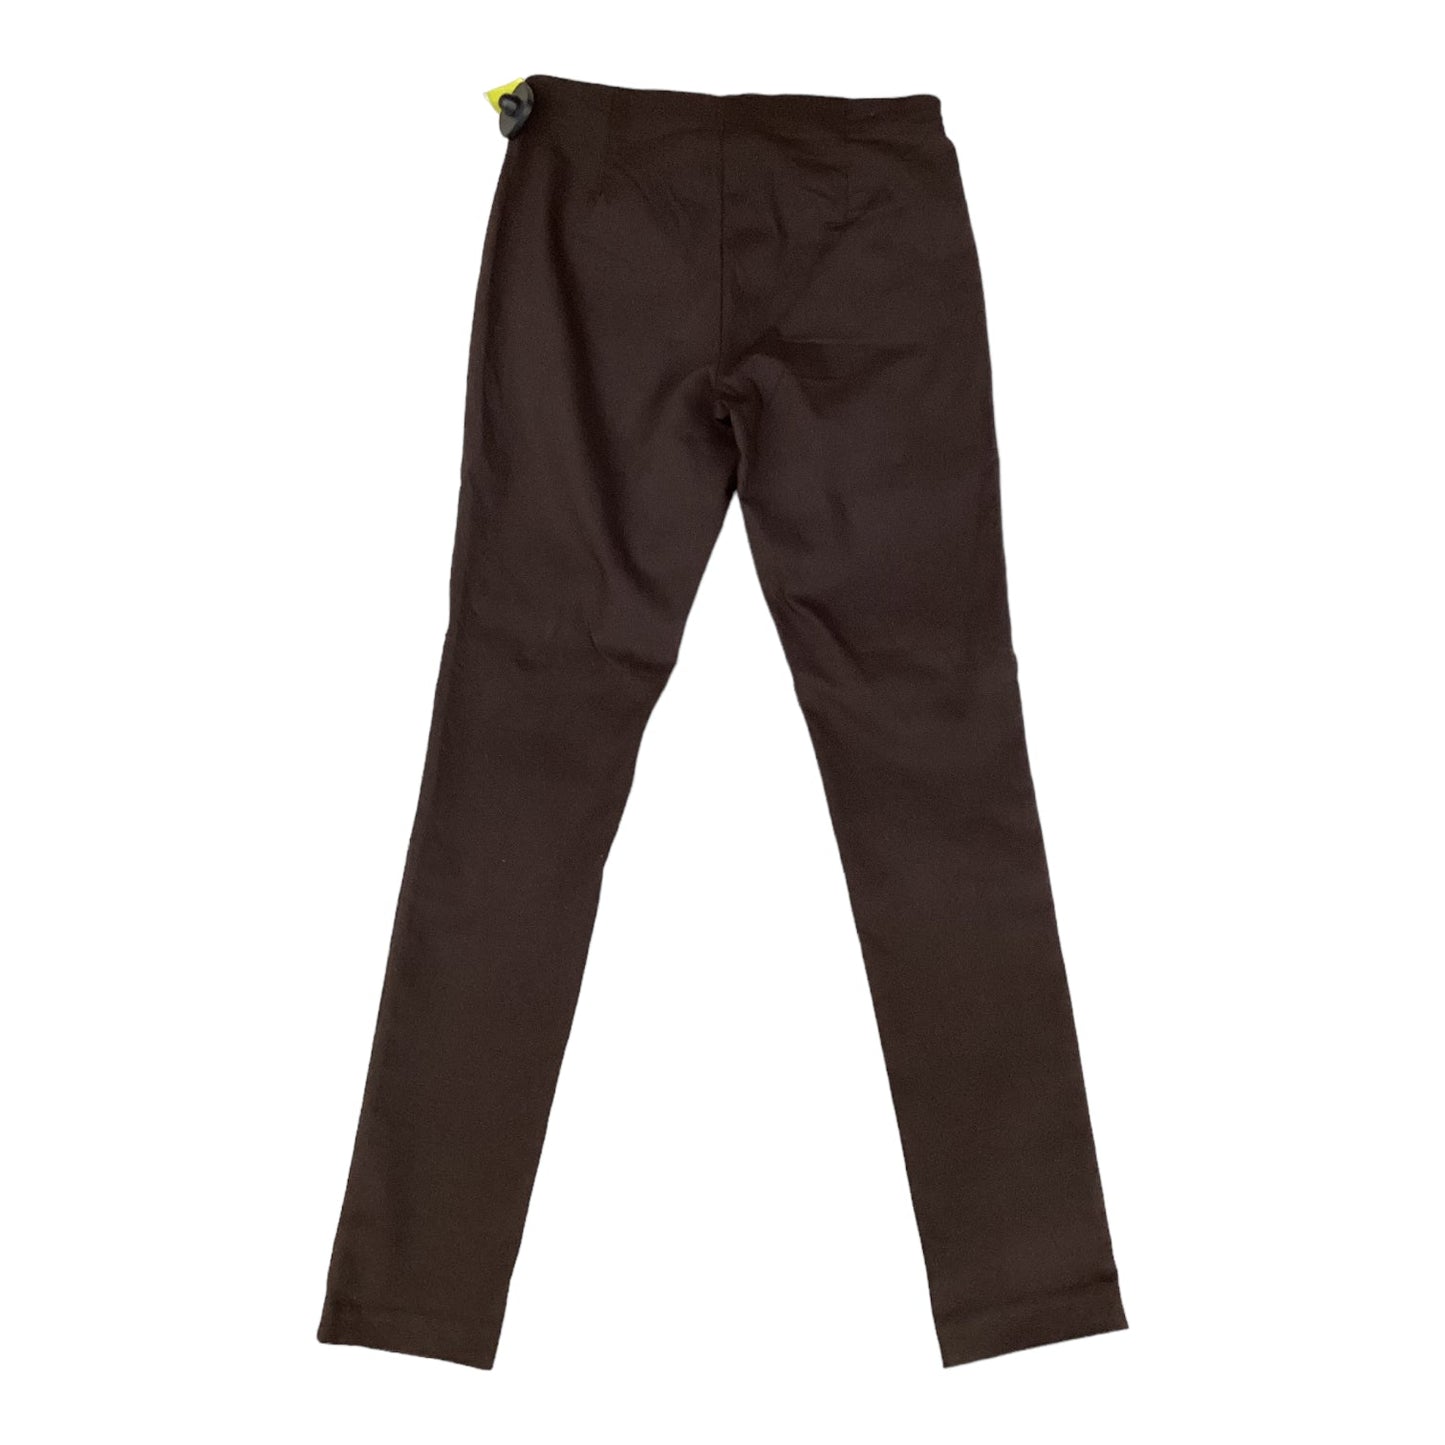 Pants Designer By Michael Kors  Size: S